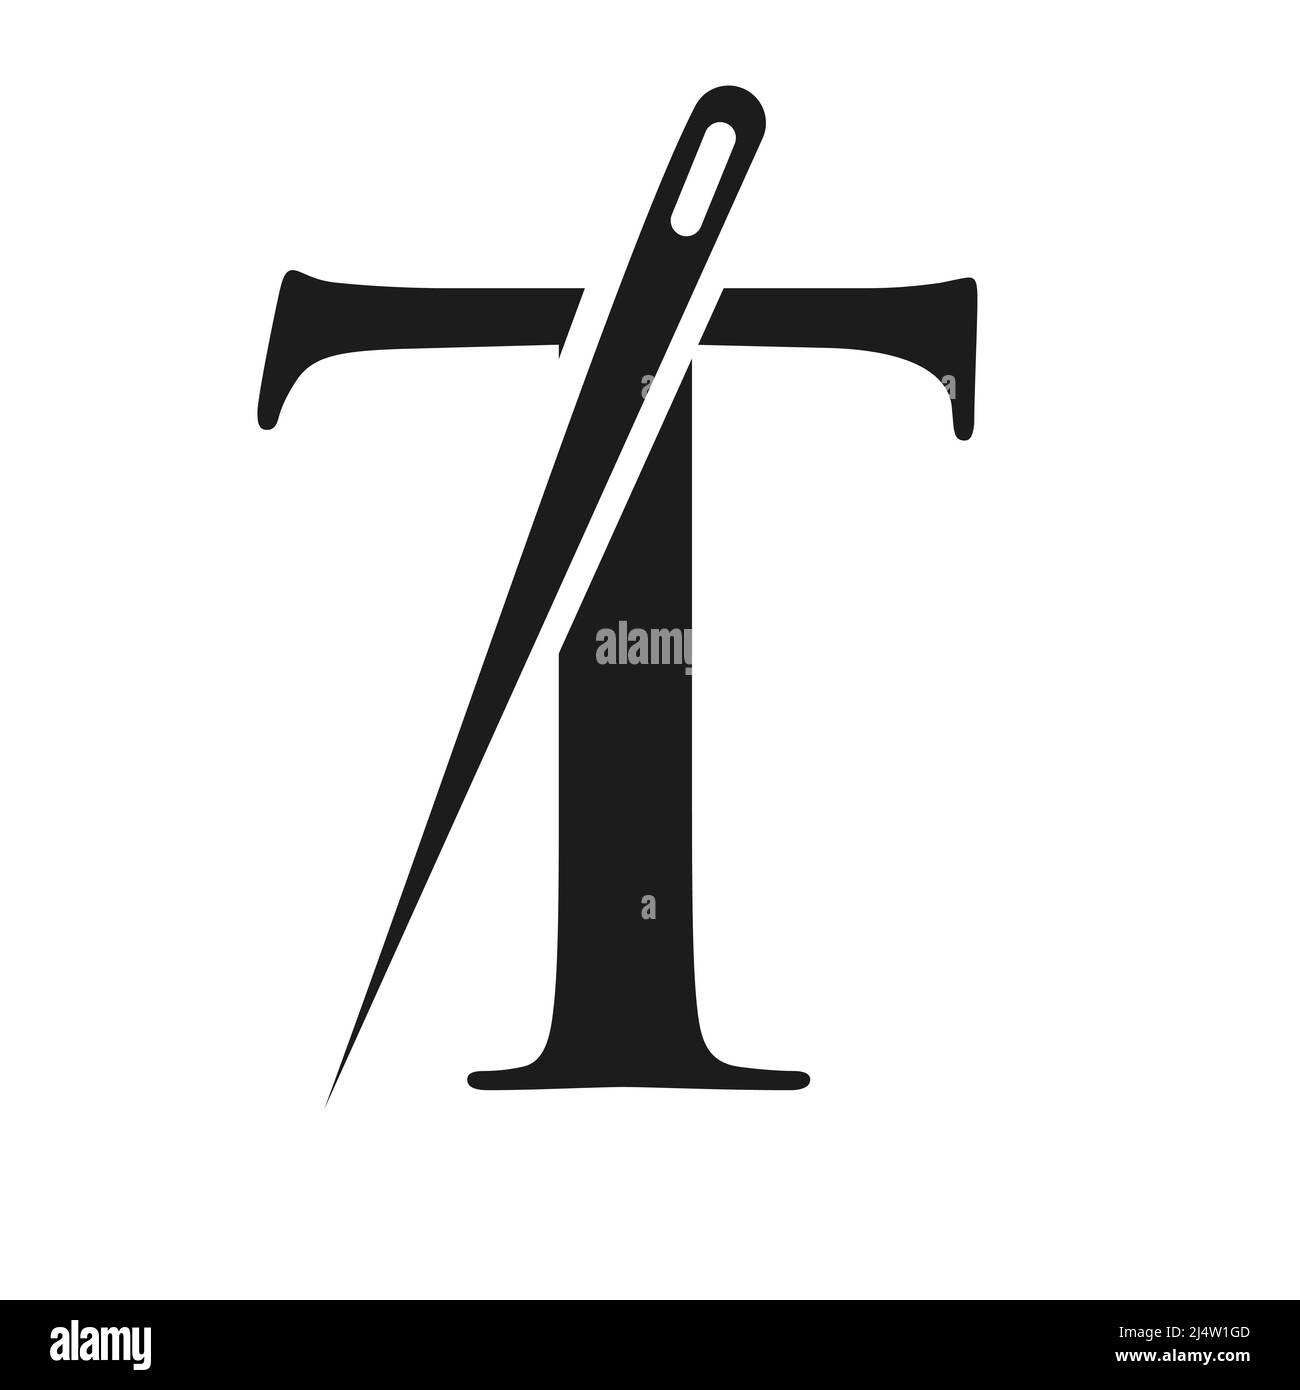 Tift County T Logo Fabric